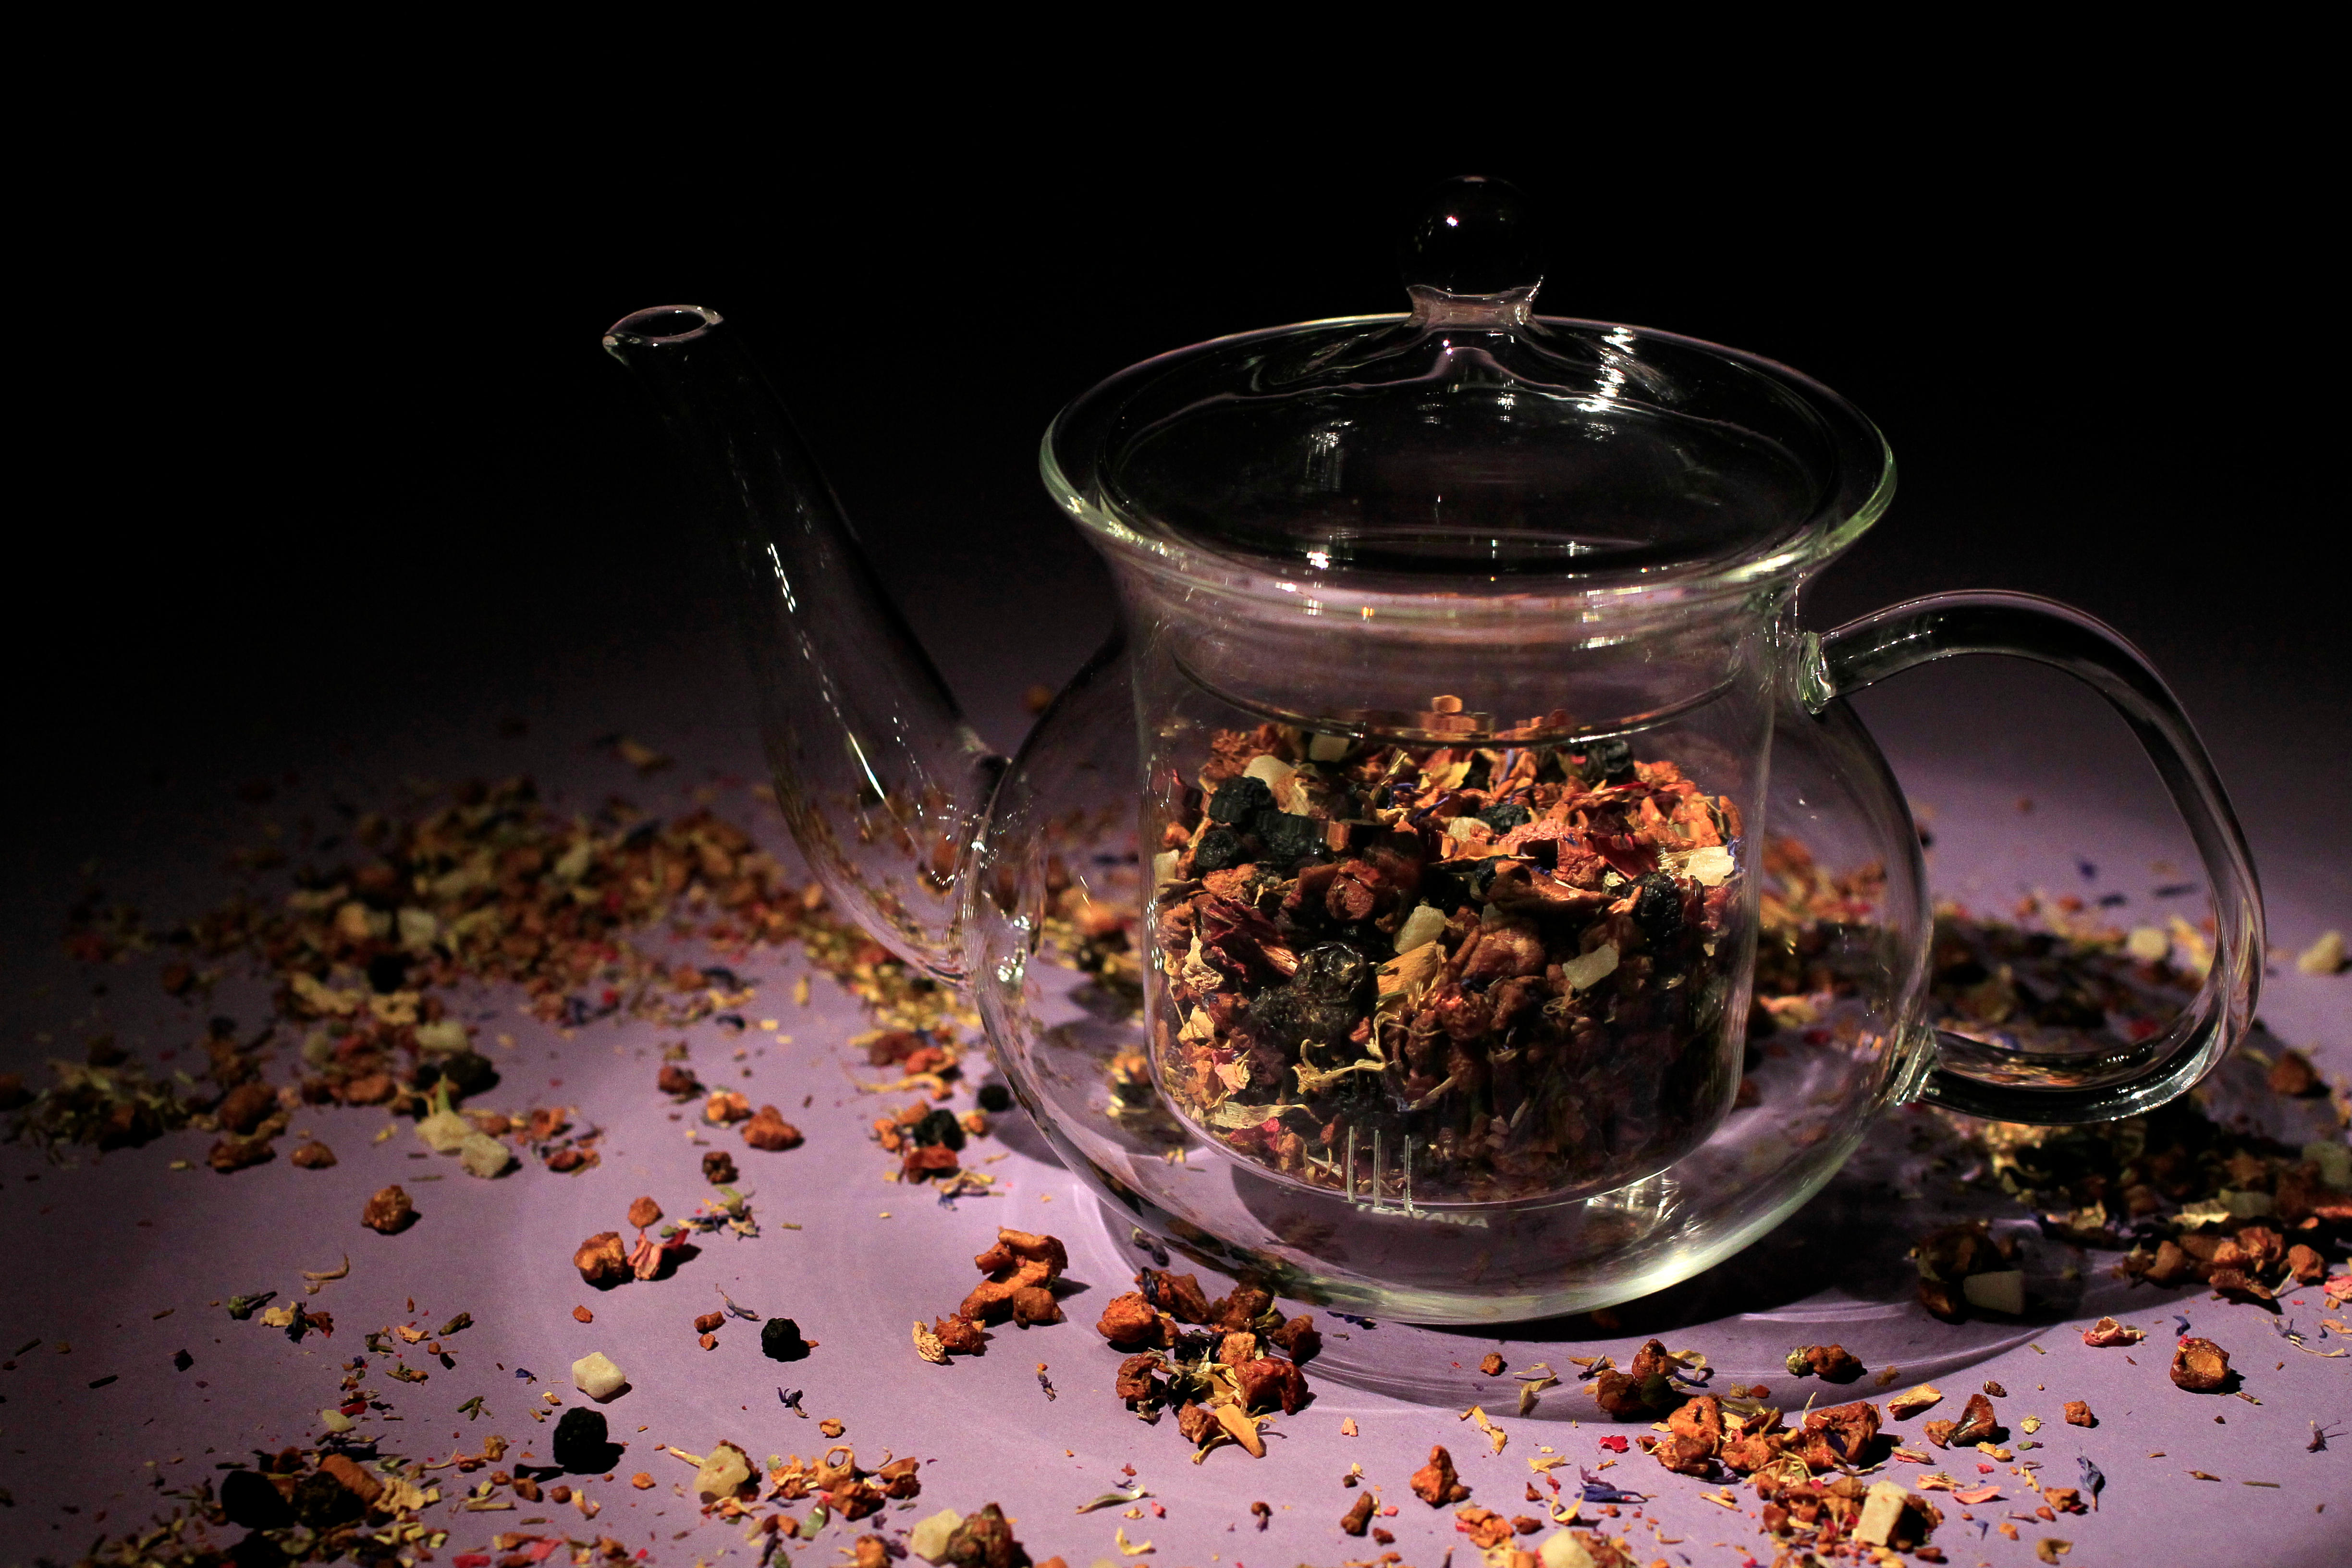 Blueberry Bliss and Pineapple Kona Pop tea mix with Teavana glass teapot